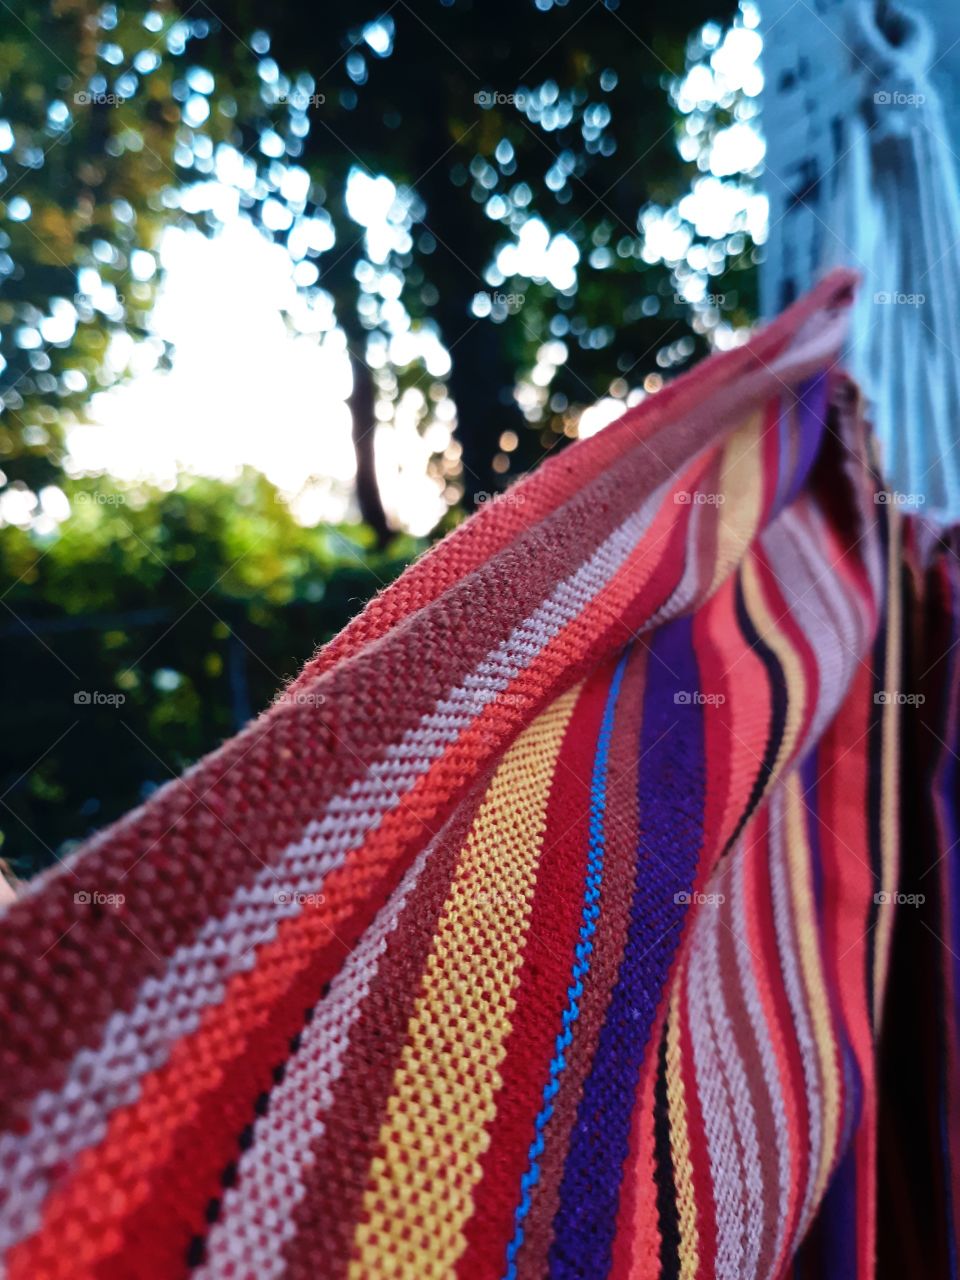 Texture of a hammock